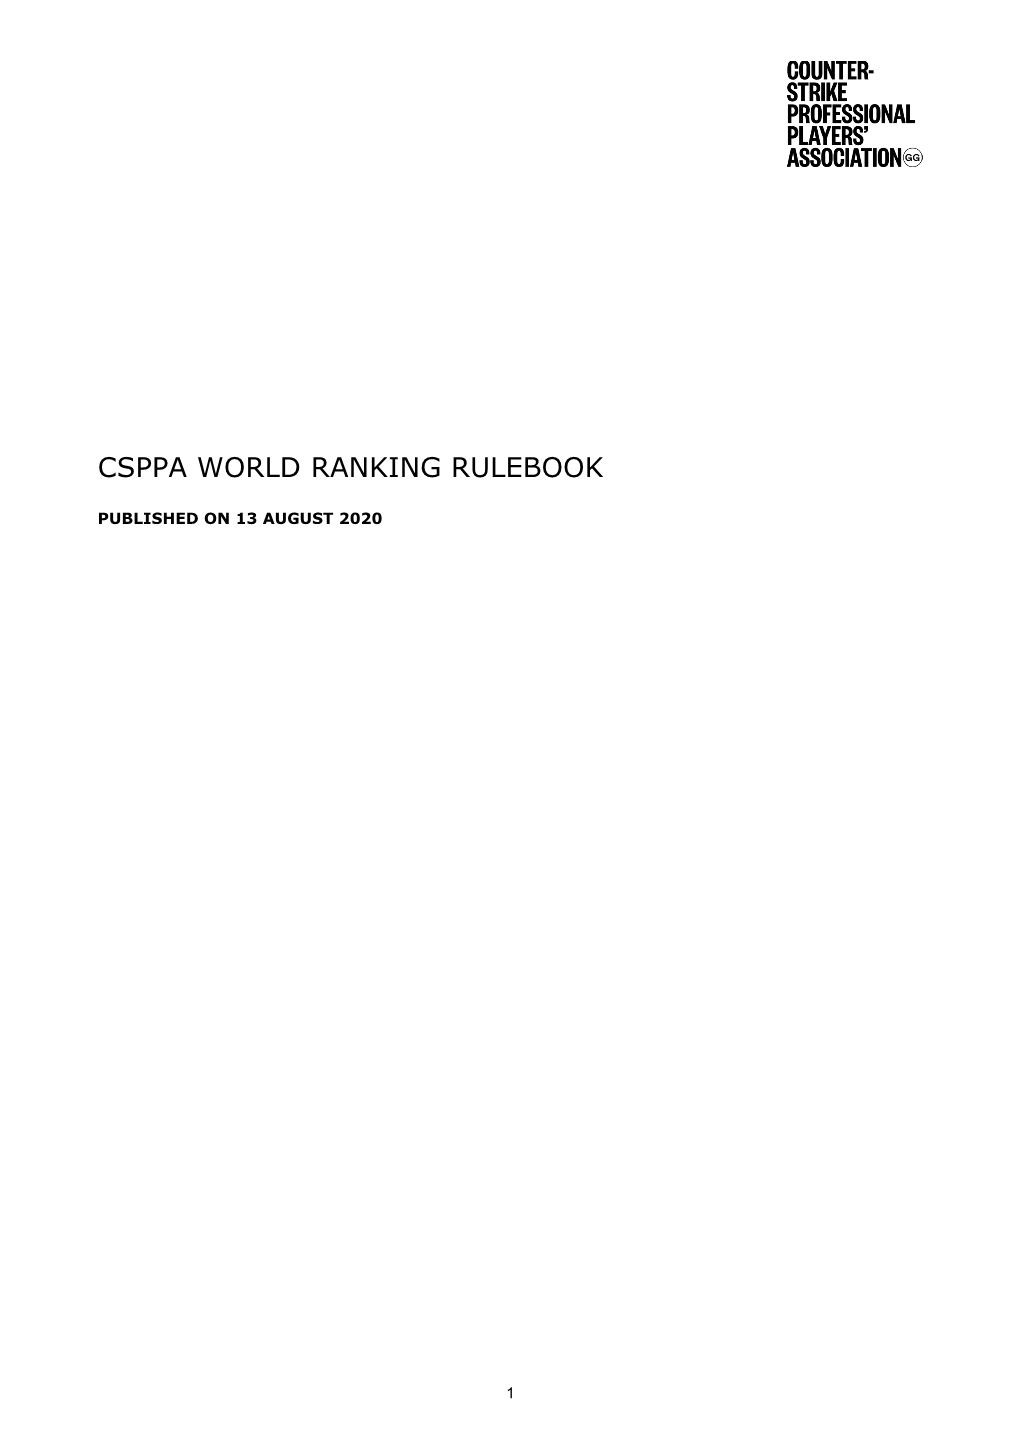 Csppa World Ranking Rulebook